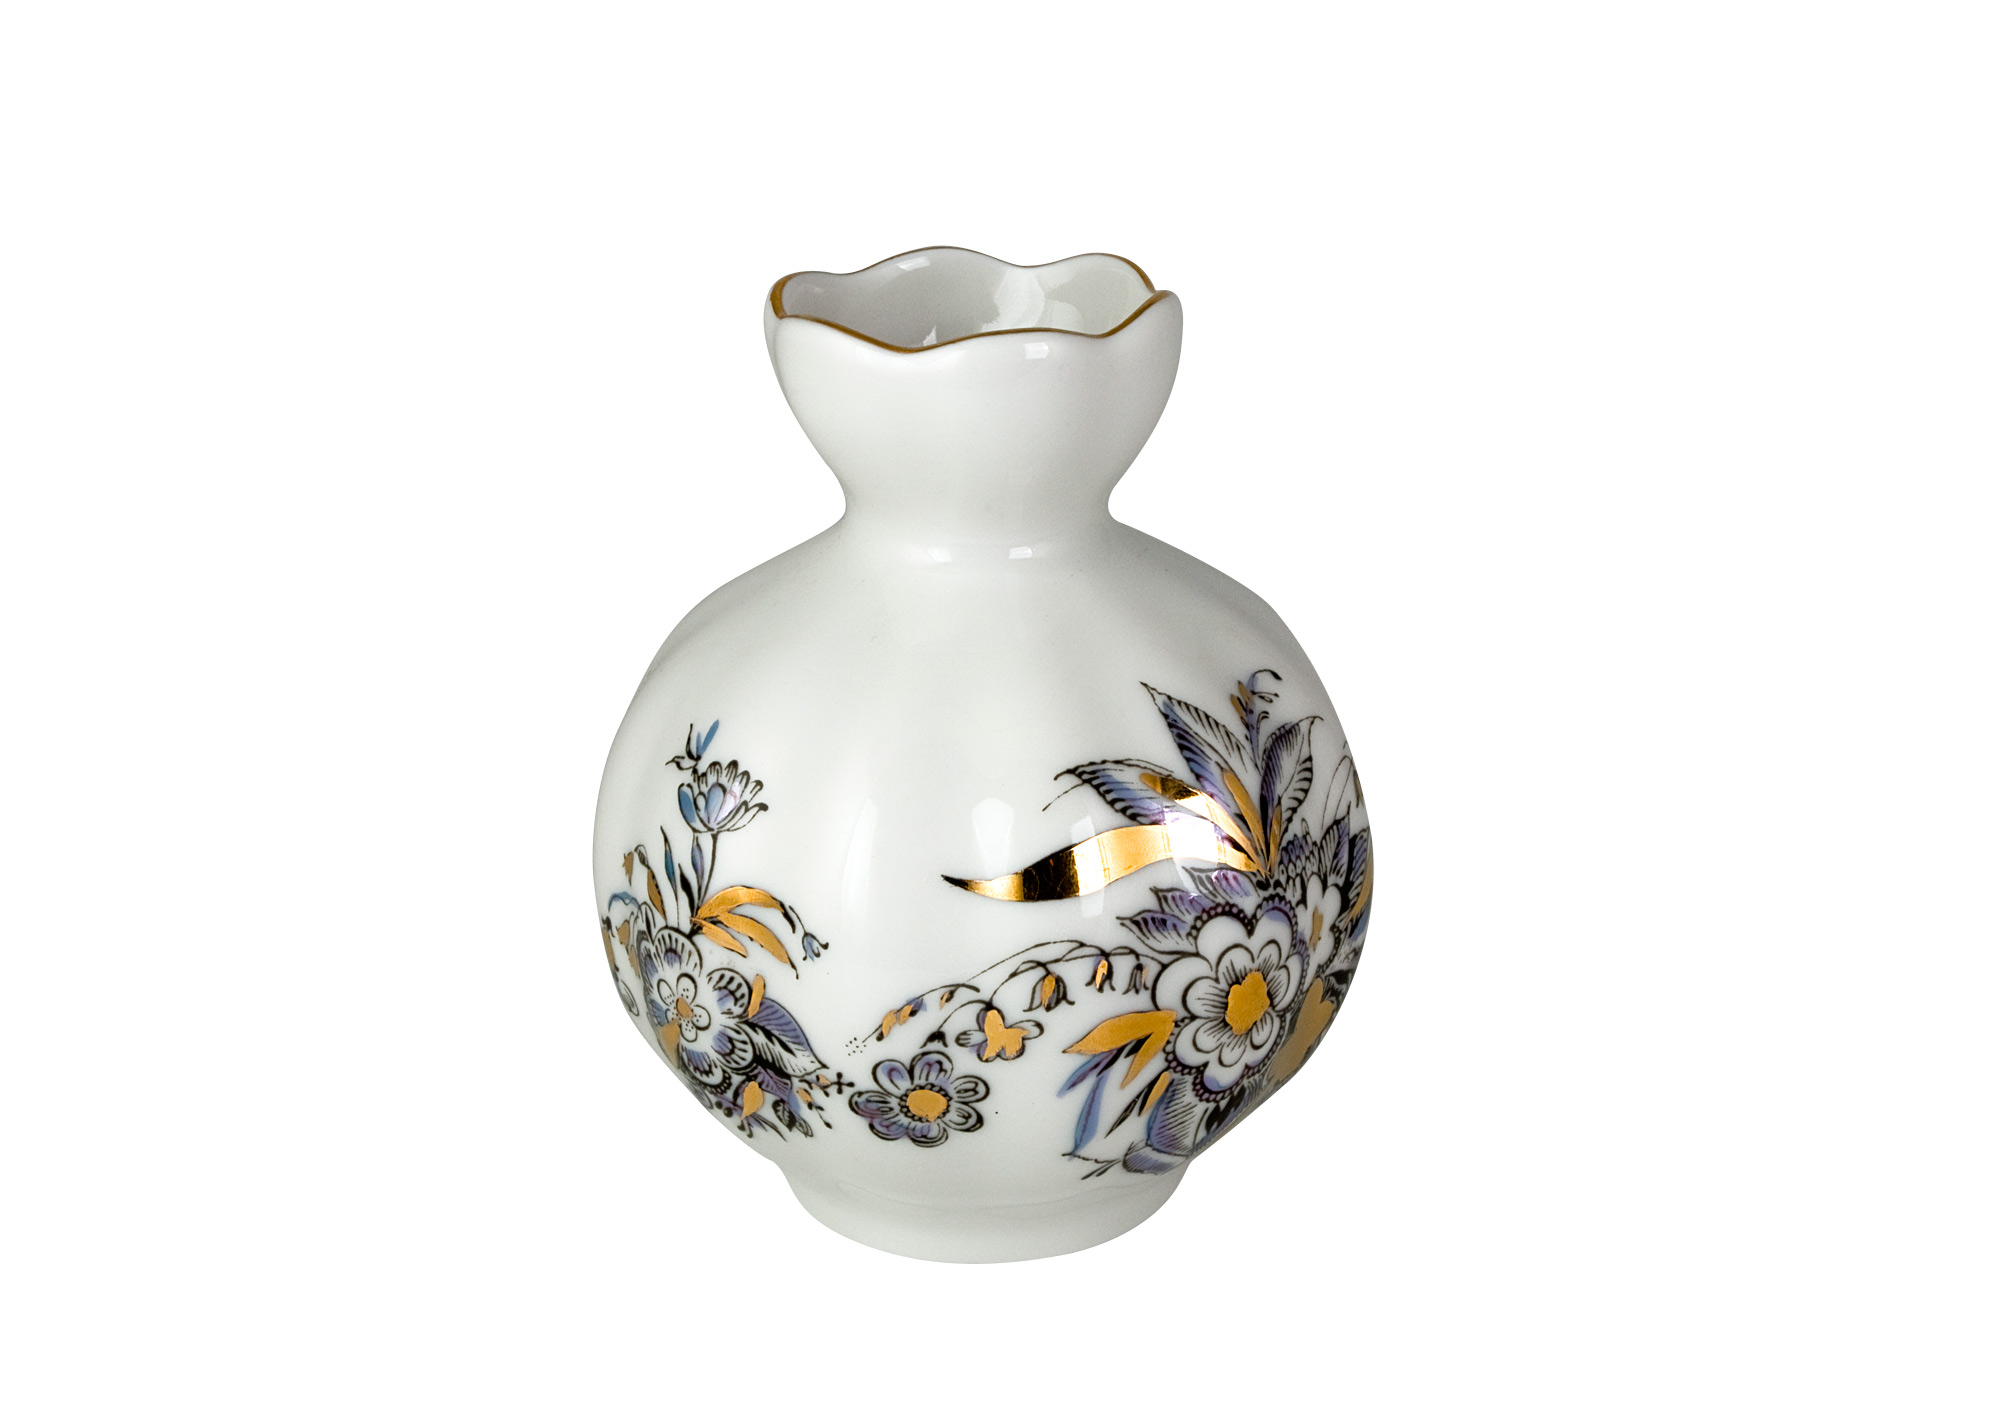 Buy Reflections Flower Vase at GoldenCockerel.com